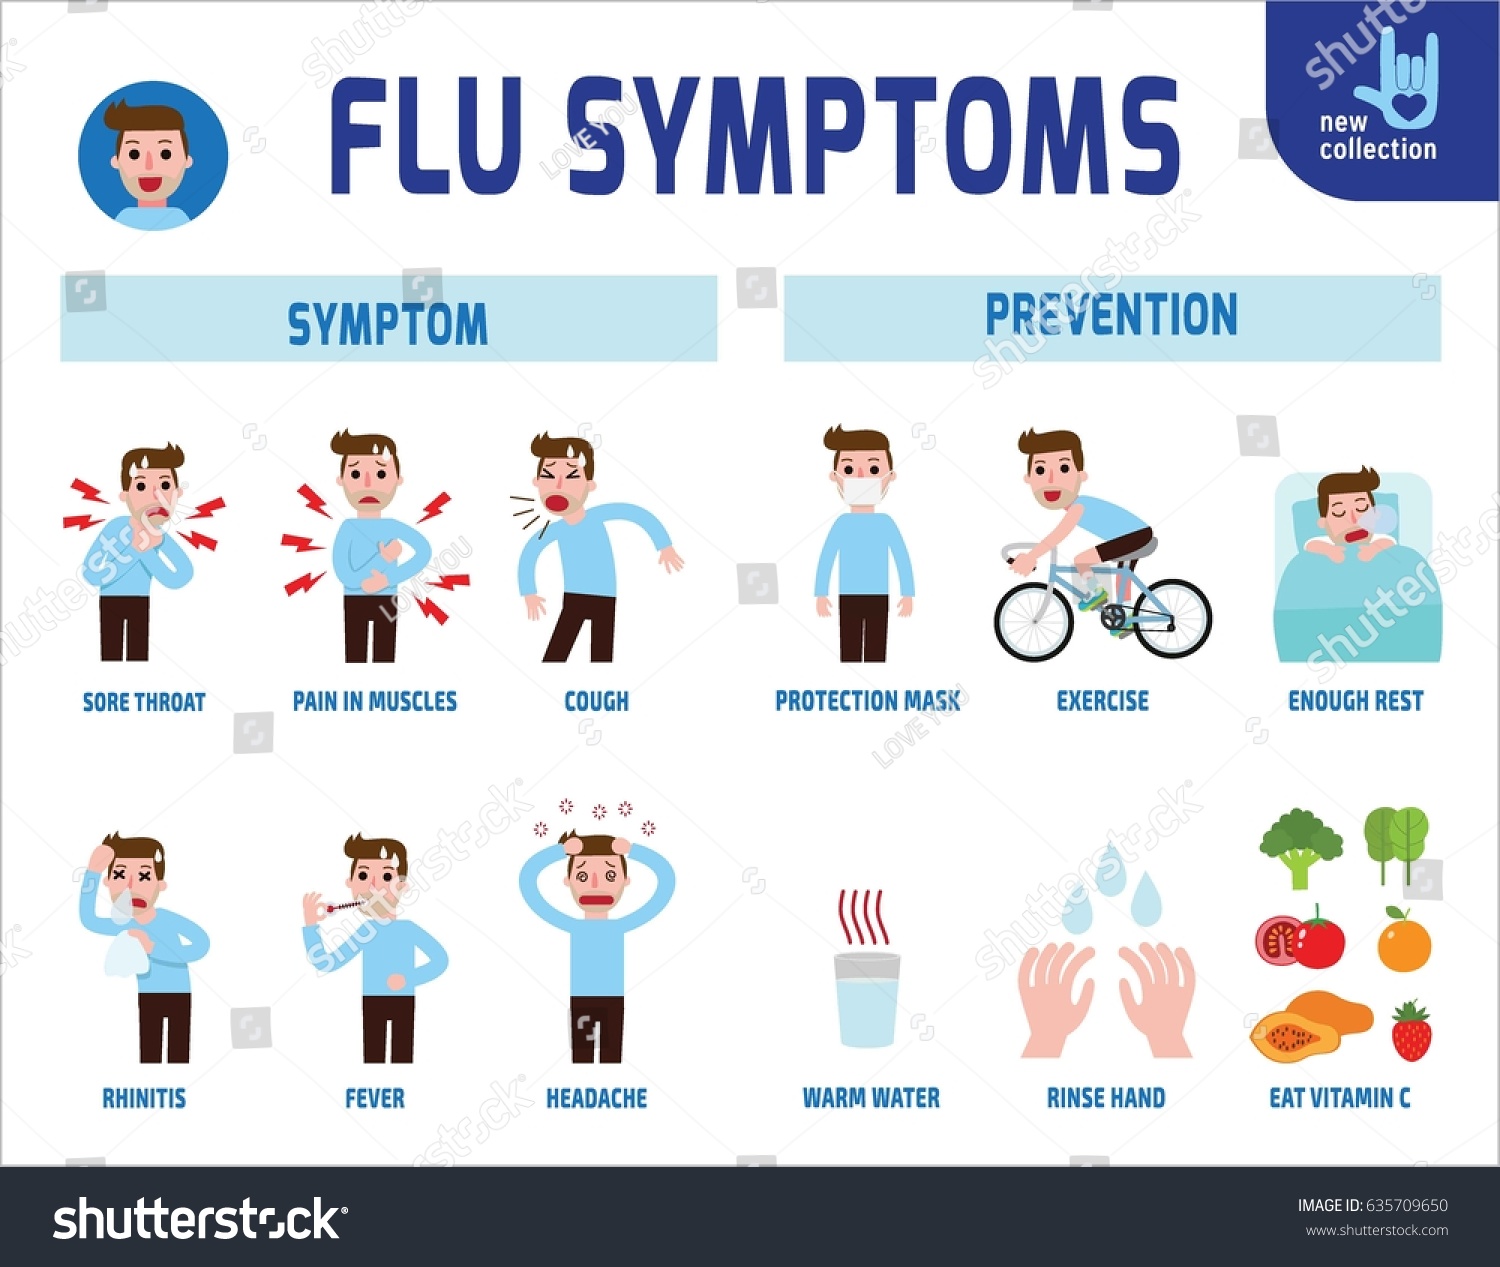 Flu Symptoms Influenza Infographic Medical Healthcare Stock Vector